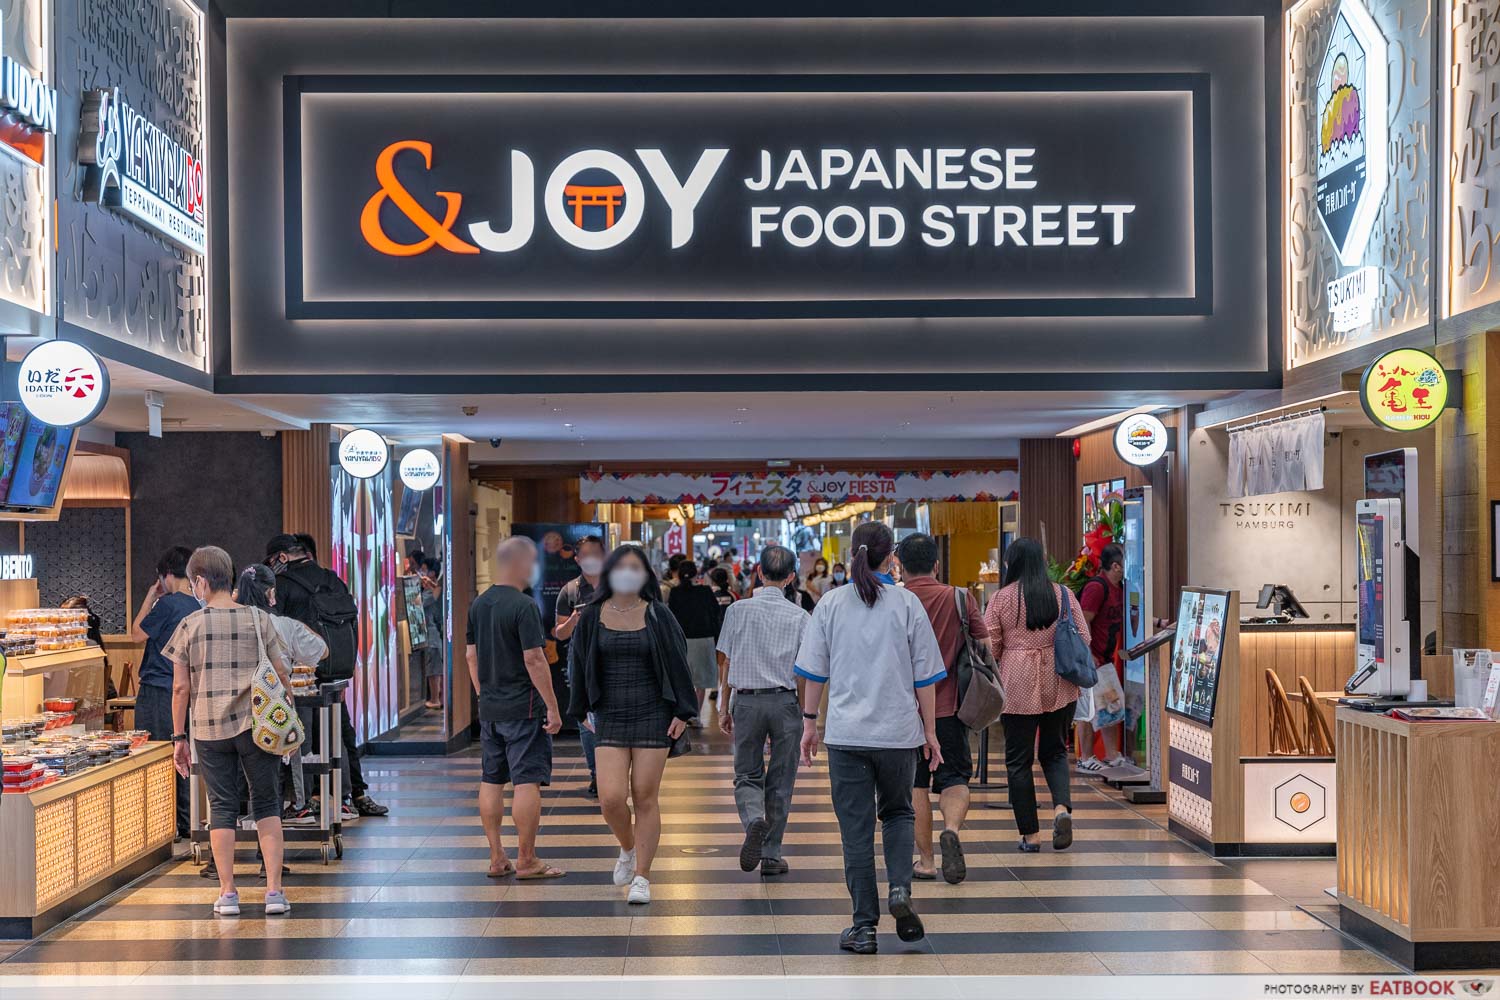 &joy japanese food street jurong point - signboard 2